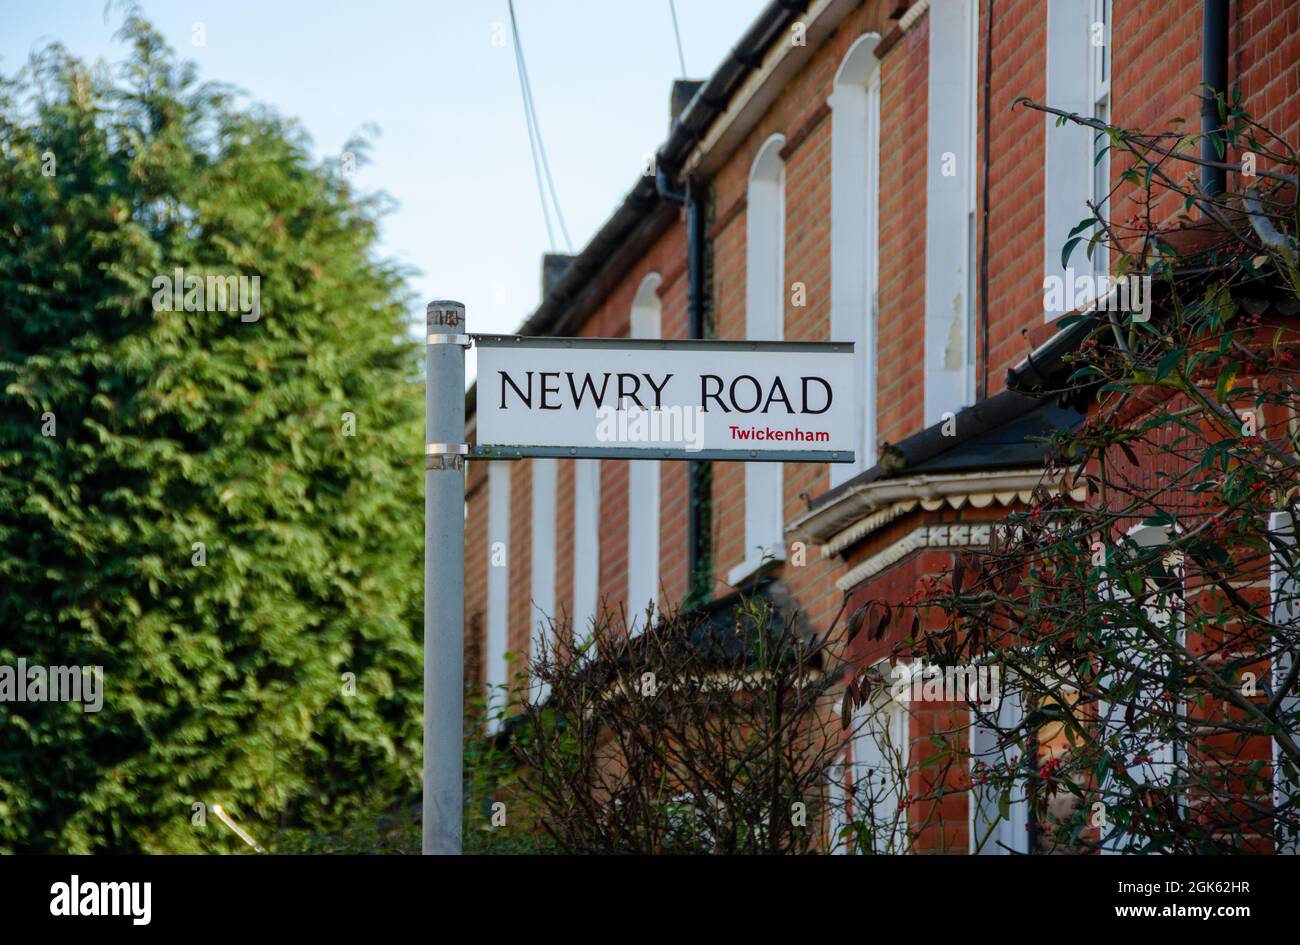 Street sign for Newry Road, St. Margaret's, Twickenham, England. Stock Photo